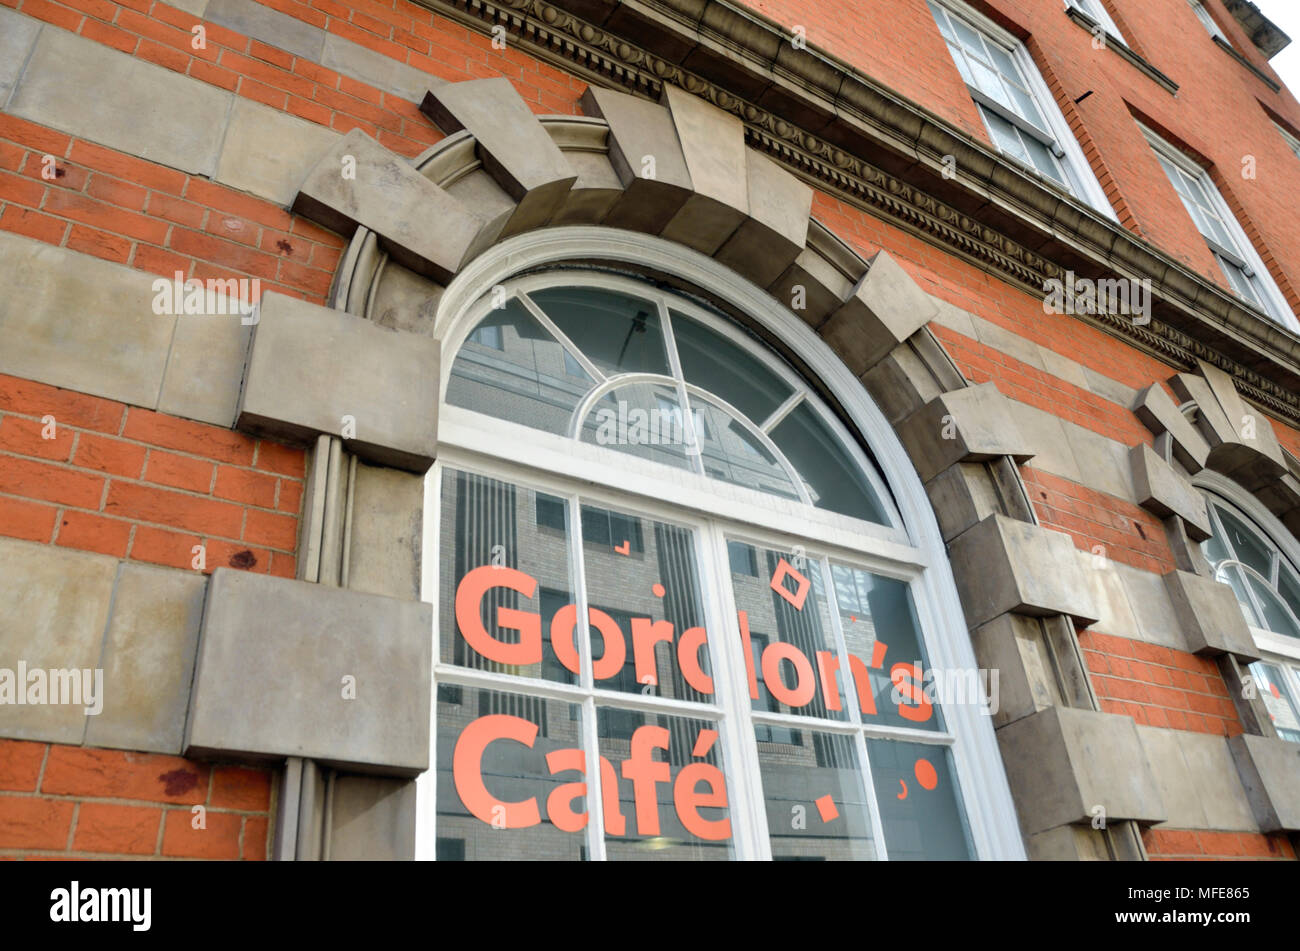 UCLU Gordon's Cafe, Gordon street, King's Cross, London, UK. Stock Photo